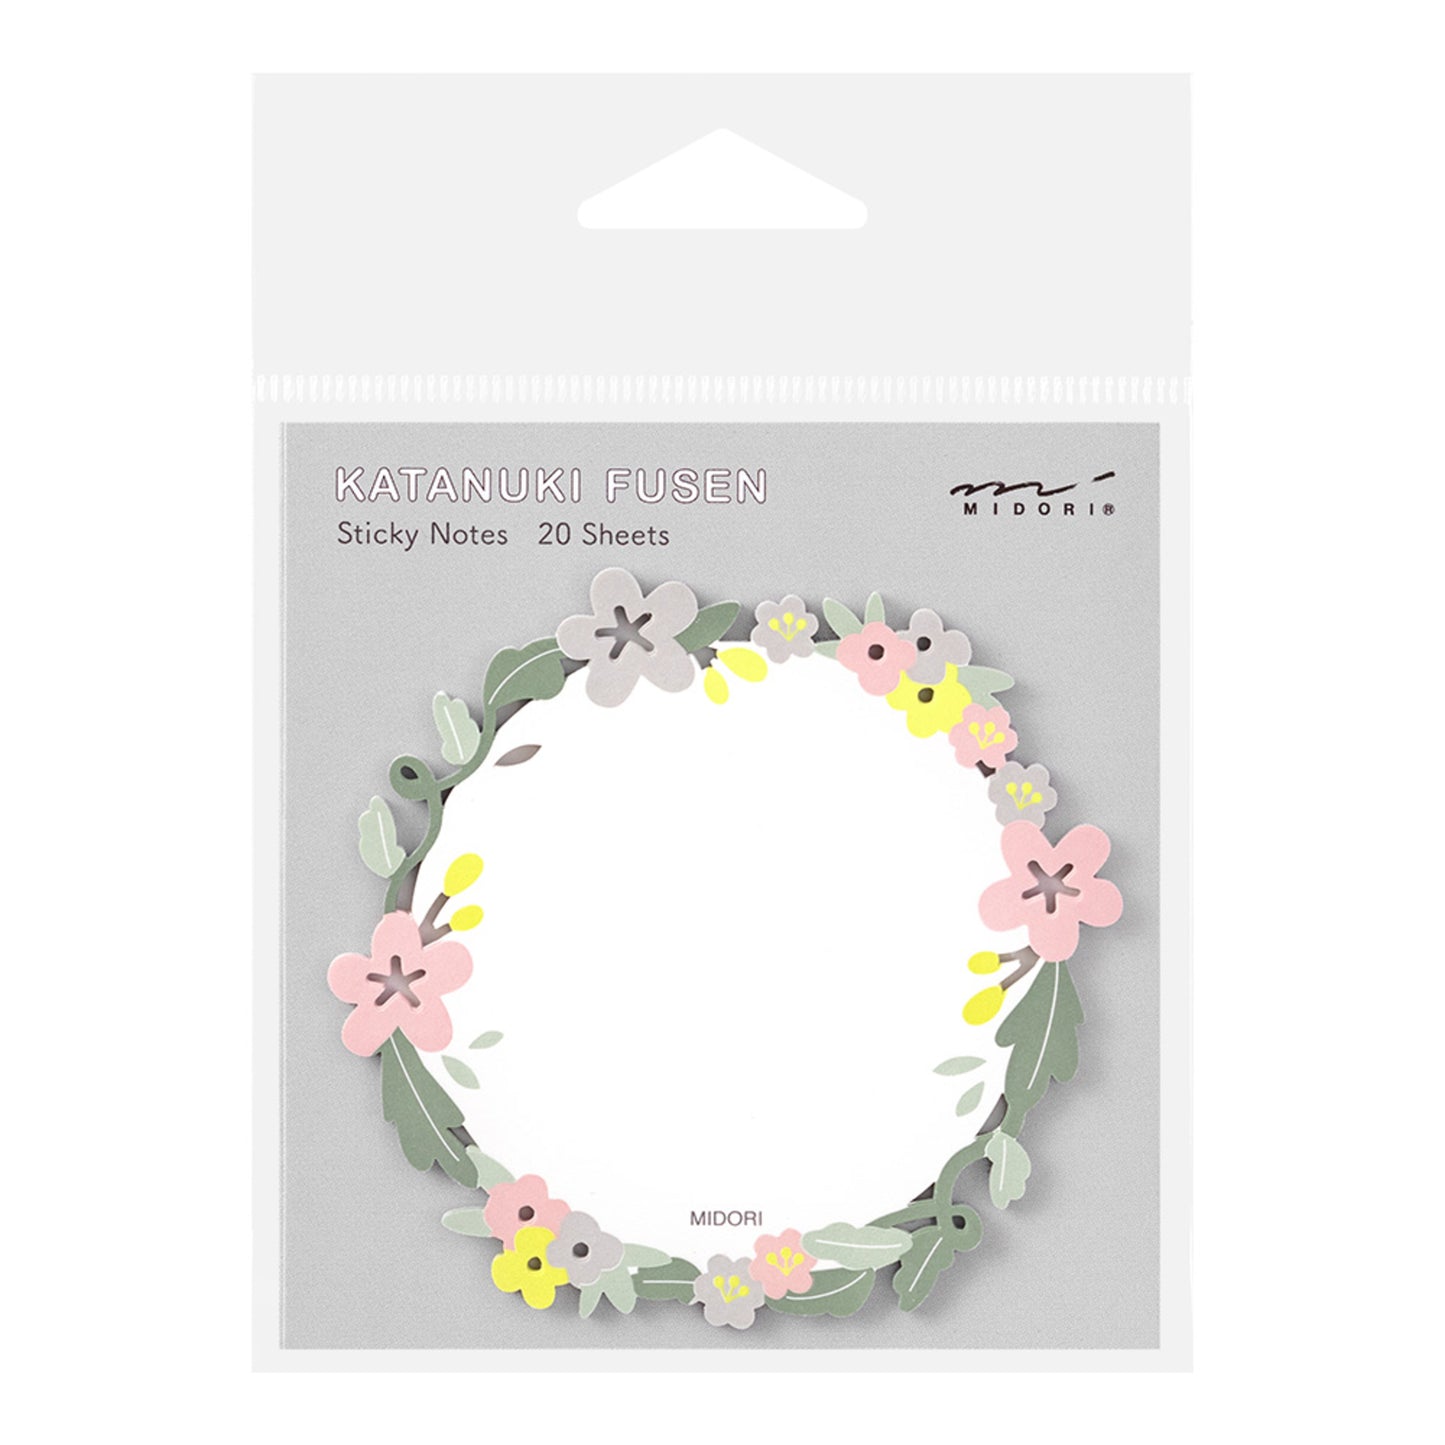 Midori Sticky Notes Die-Cut Wreath